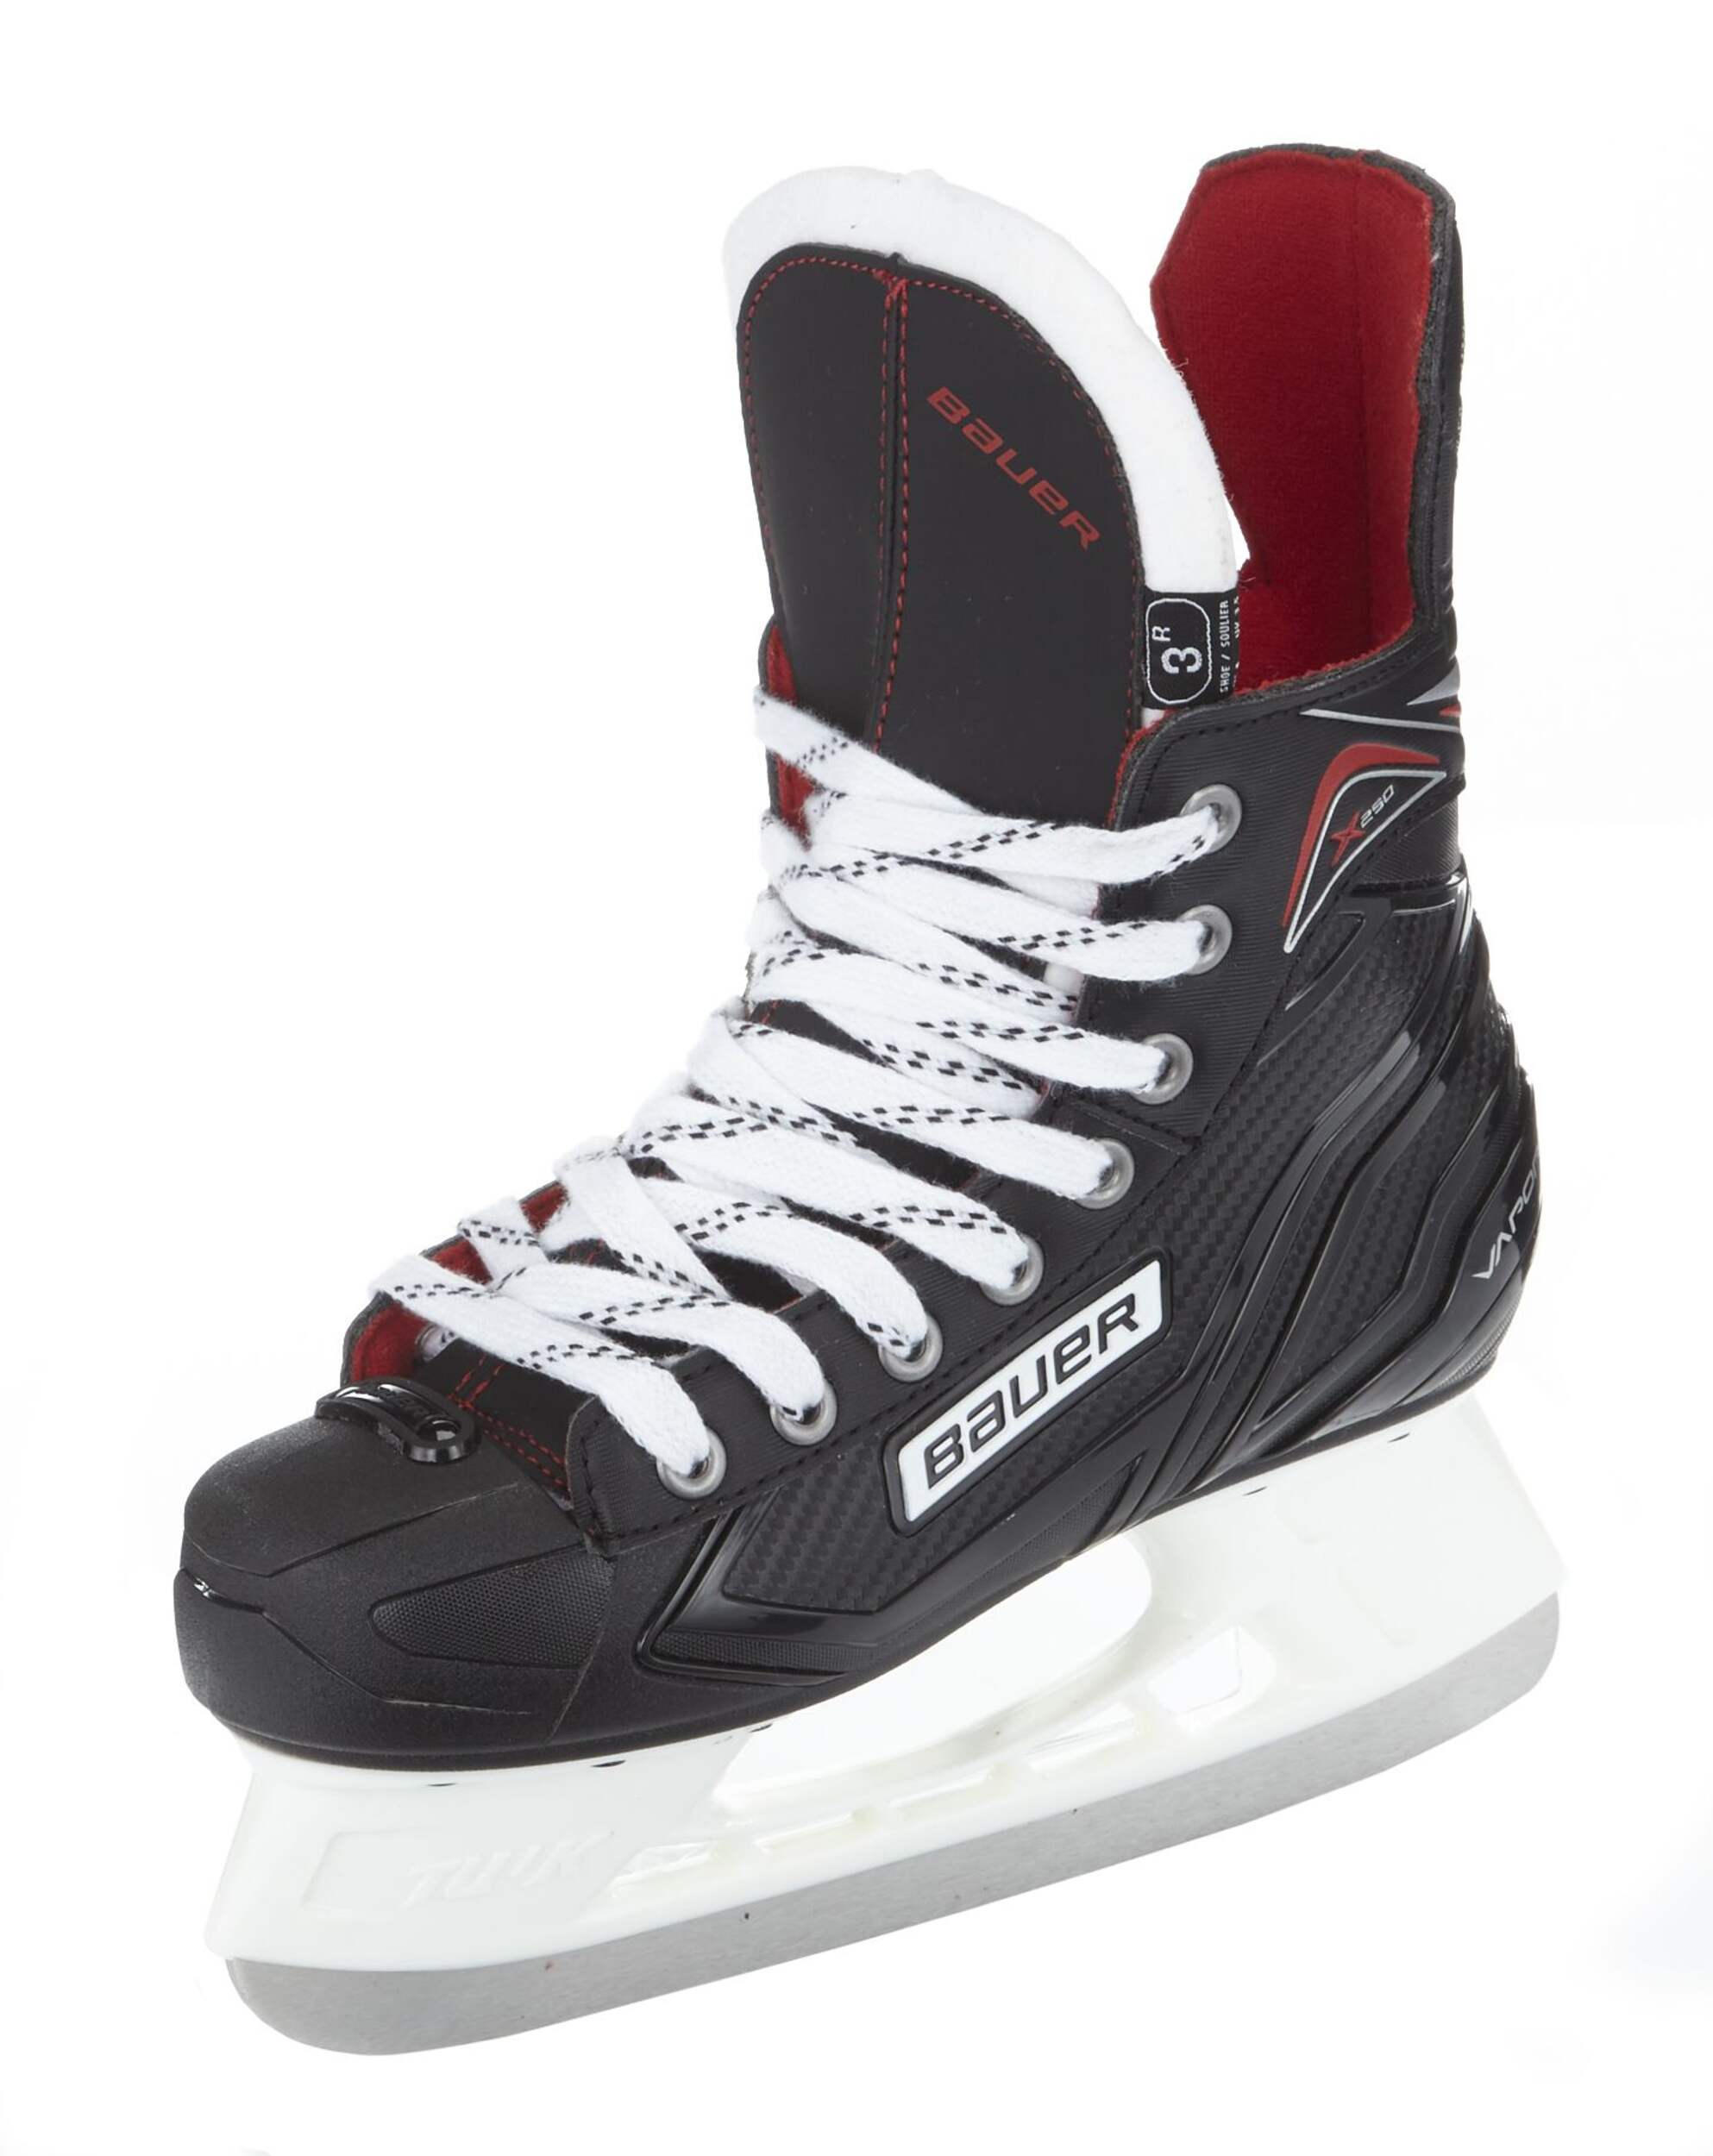 BAUER Vapor X250 Junior Hockey Skates - Black/Red (Size US 4)